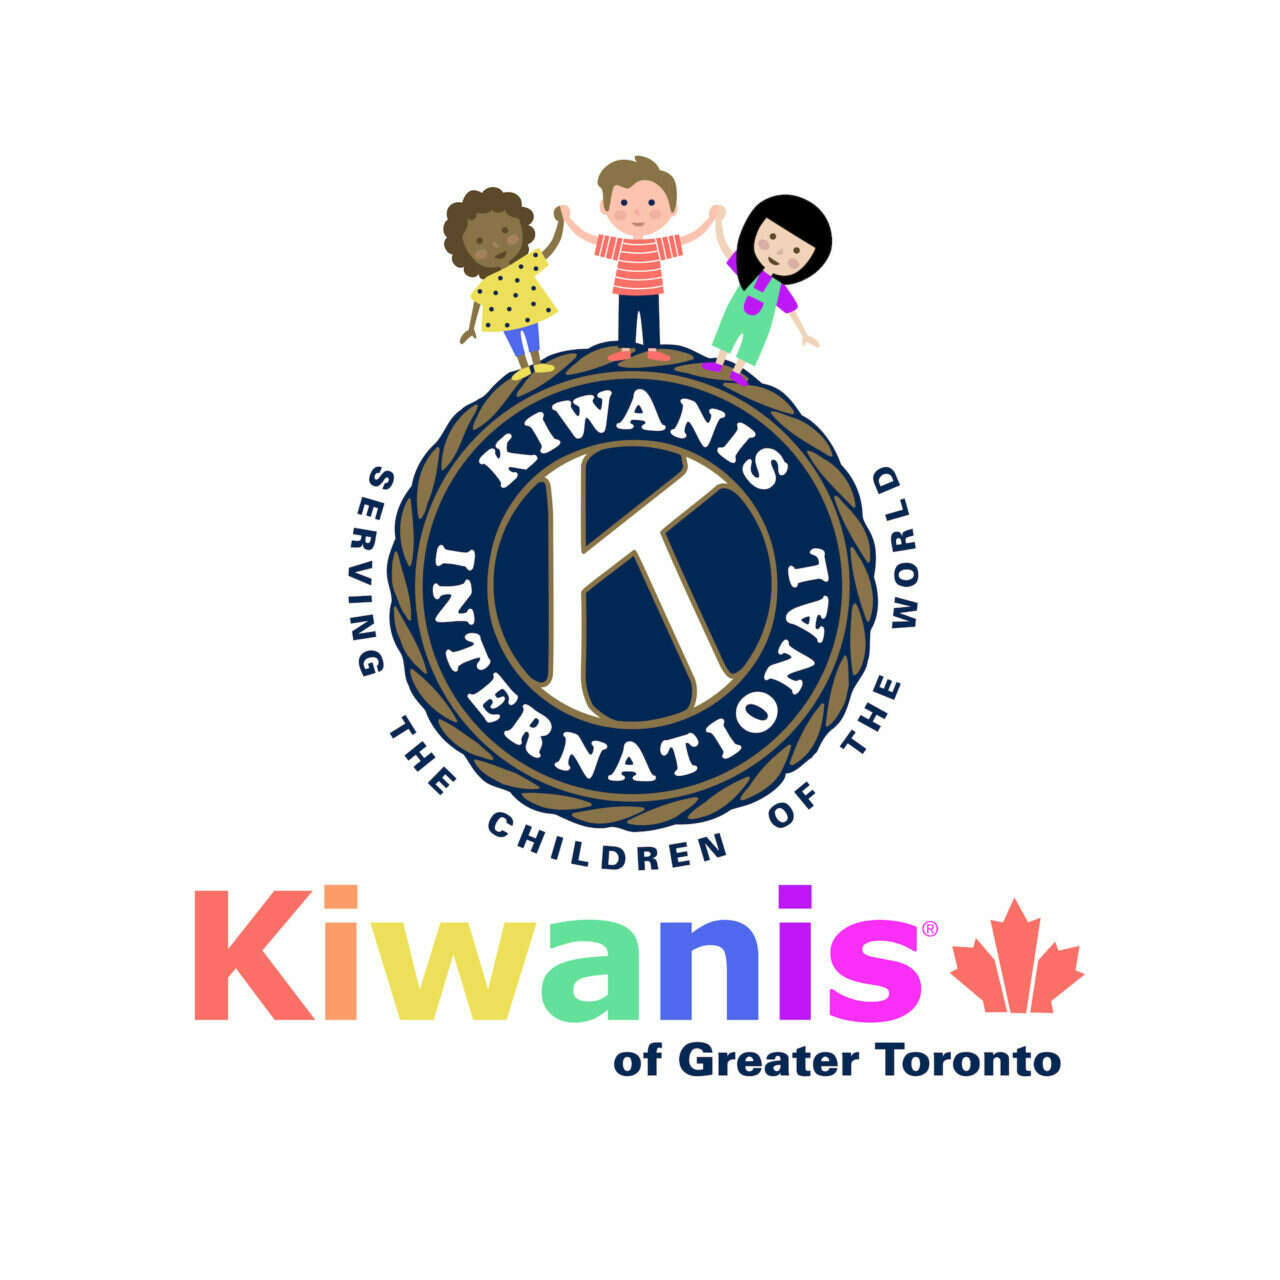 Kiwanis Clubs of Greater Toronto